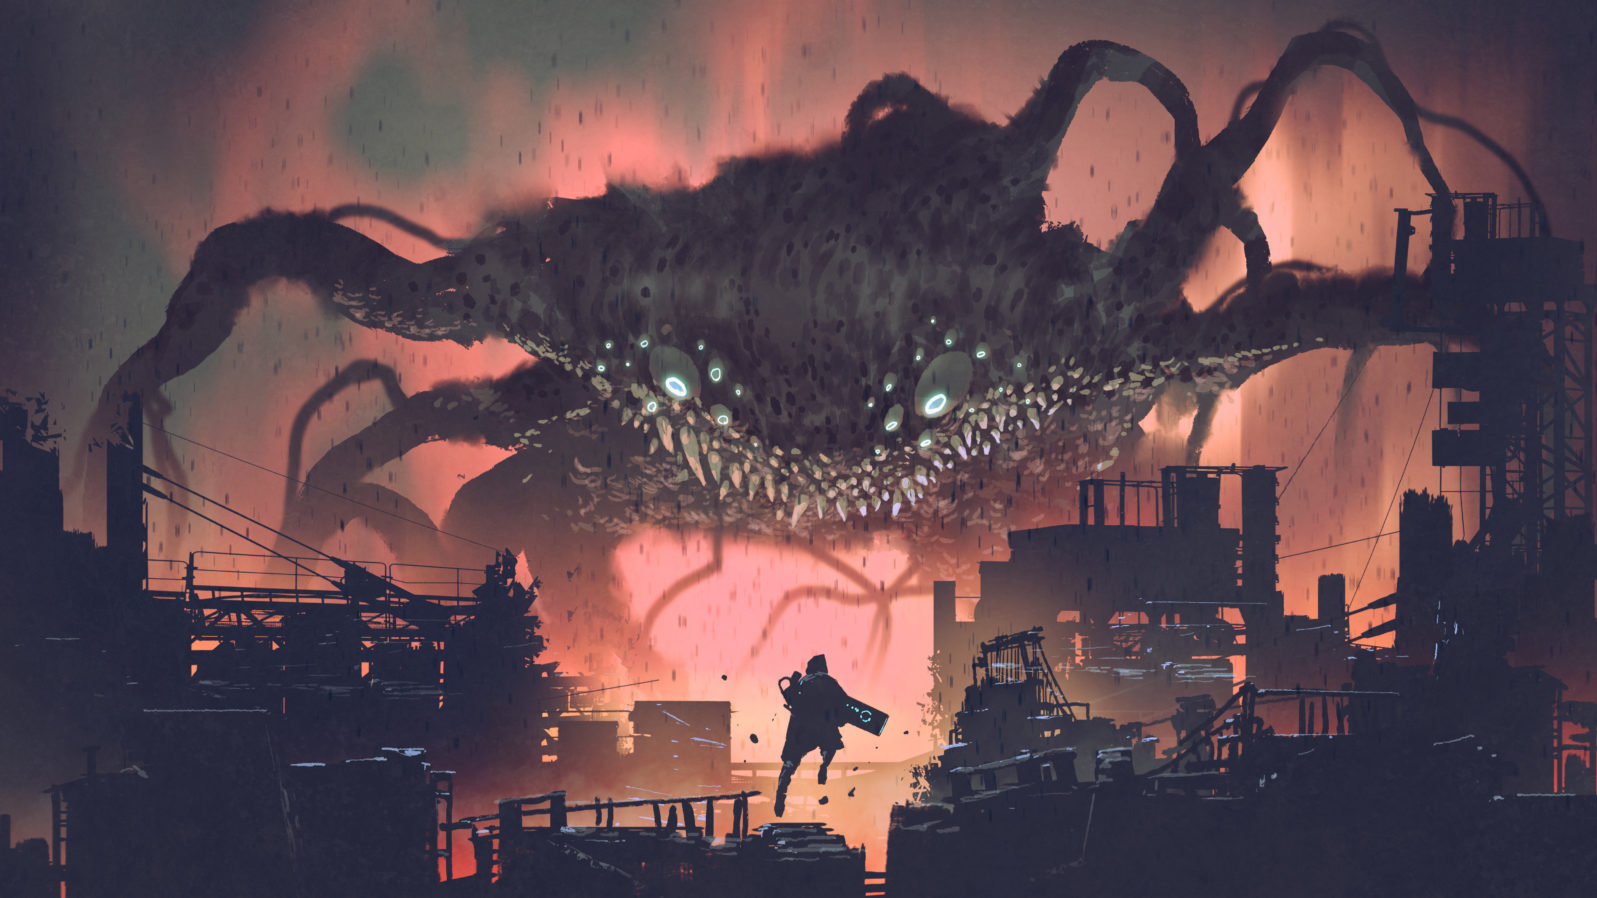 sci-fi scene showing the giant monster invading night city, digital art style, illustration painting